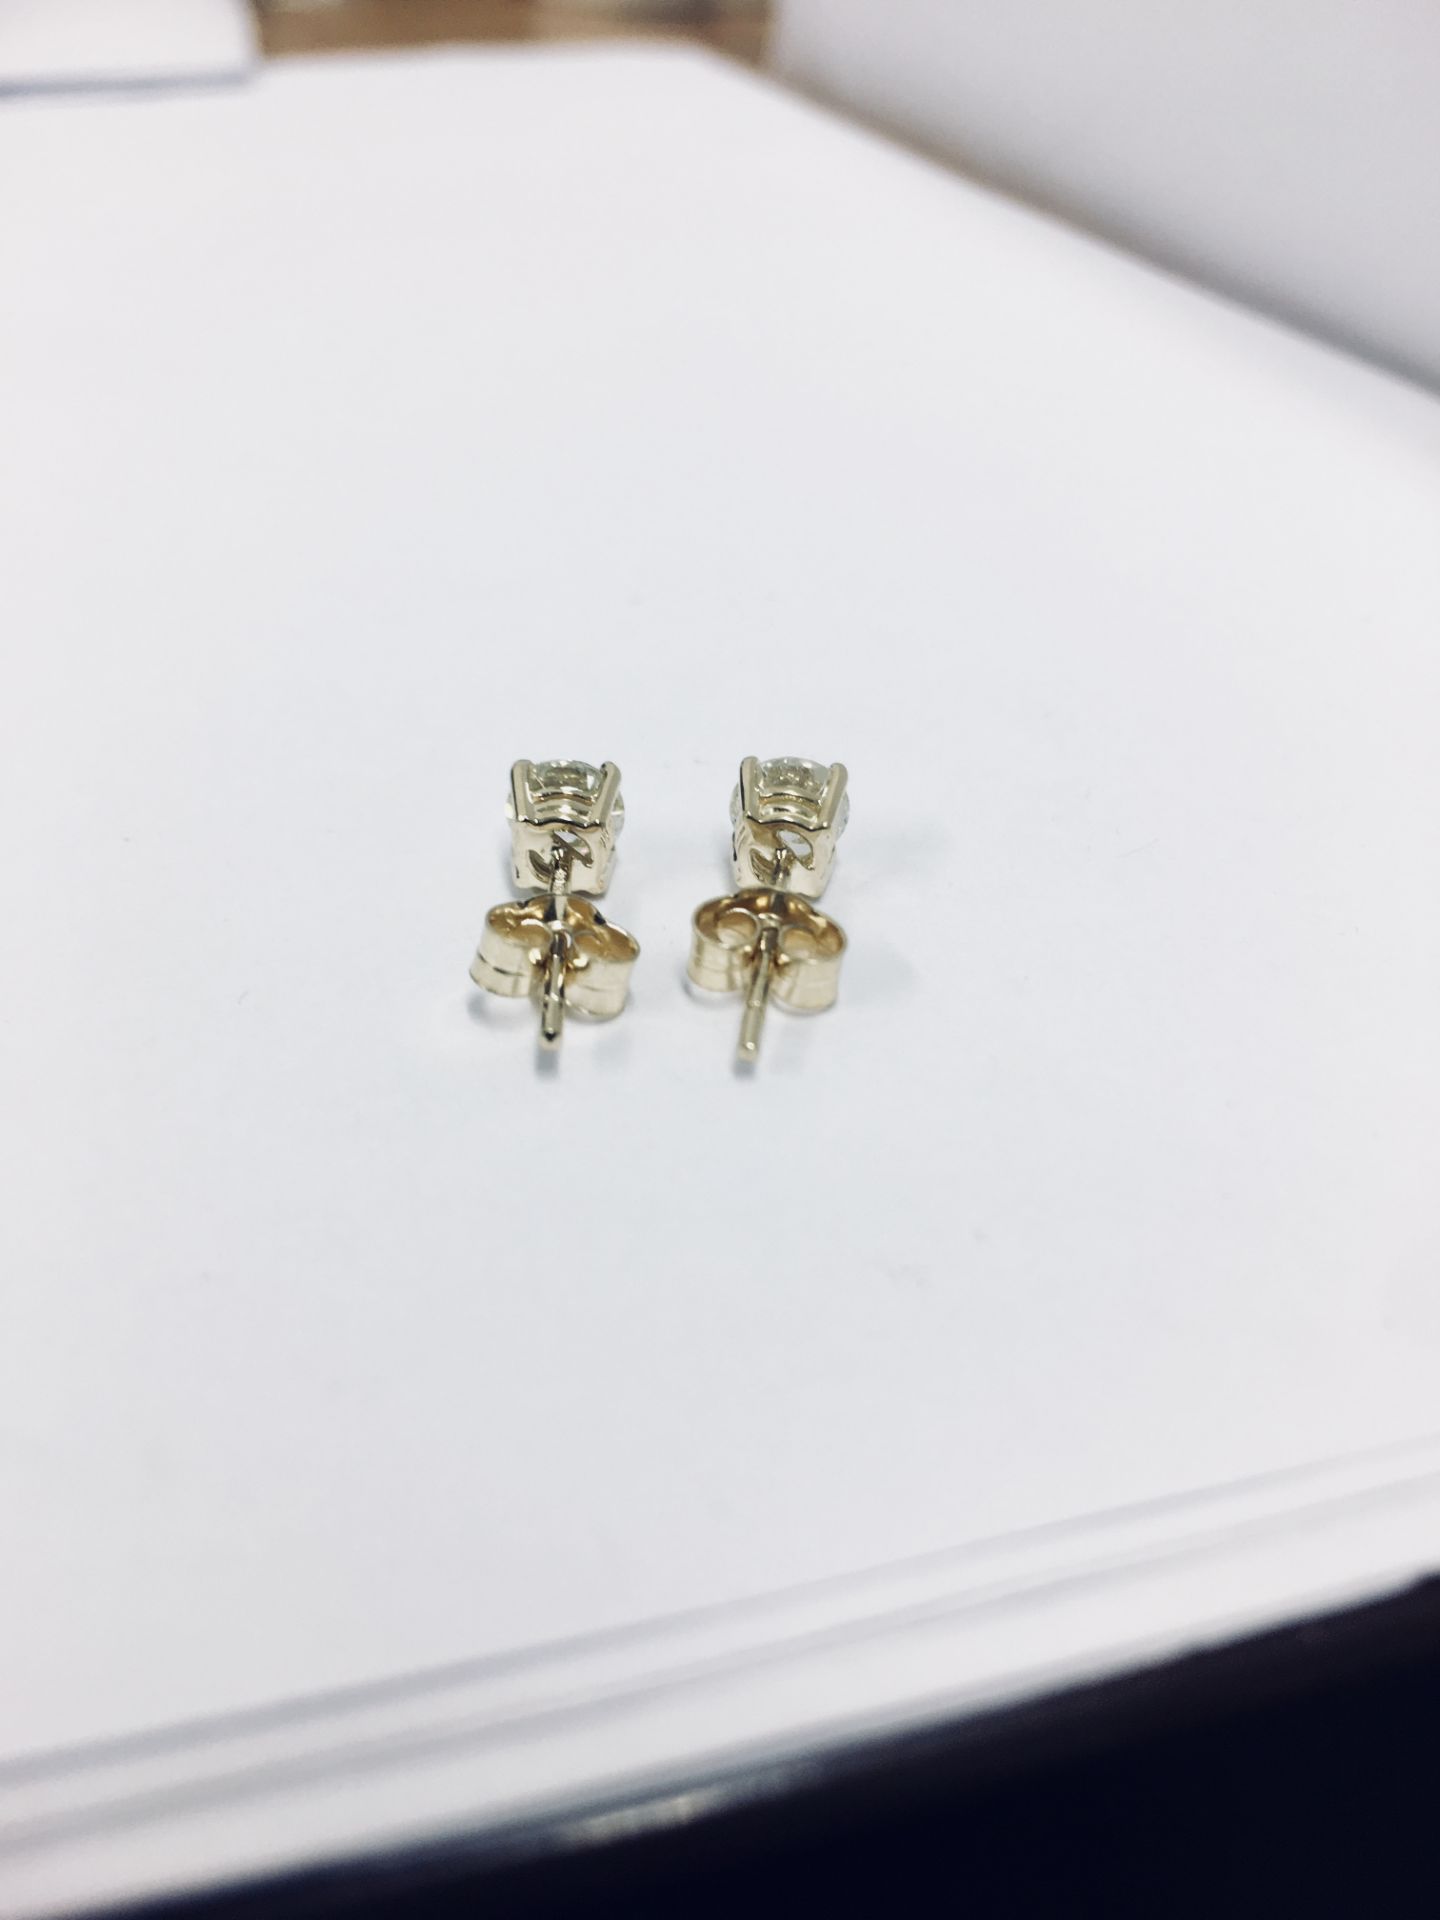 1ct diamond solitaire earrings,2 x 0.50ct h colour vs grade (enhanced diamonds) 2gms 18ct yellow .uk - Image 3 of 4